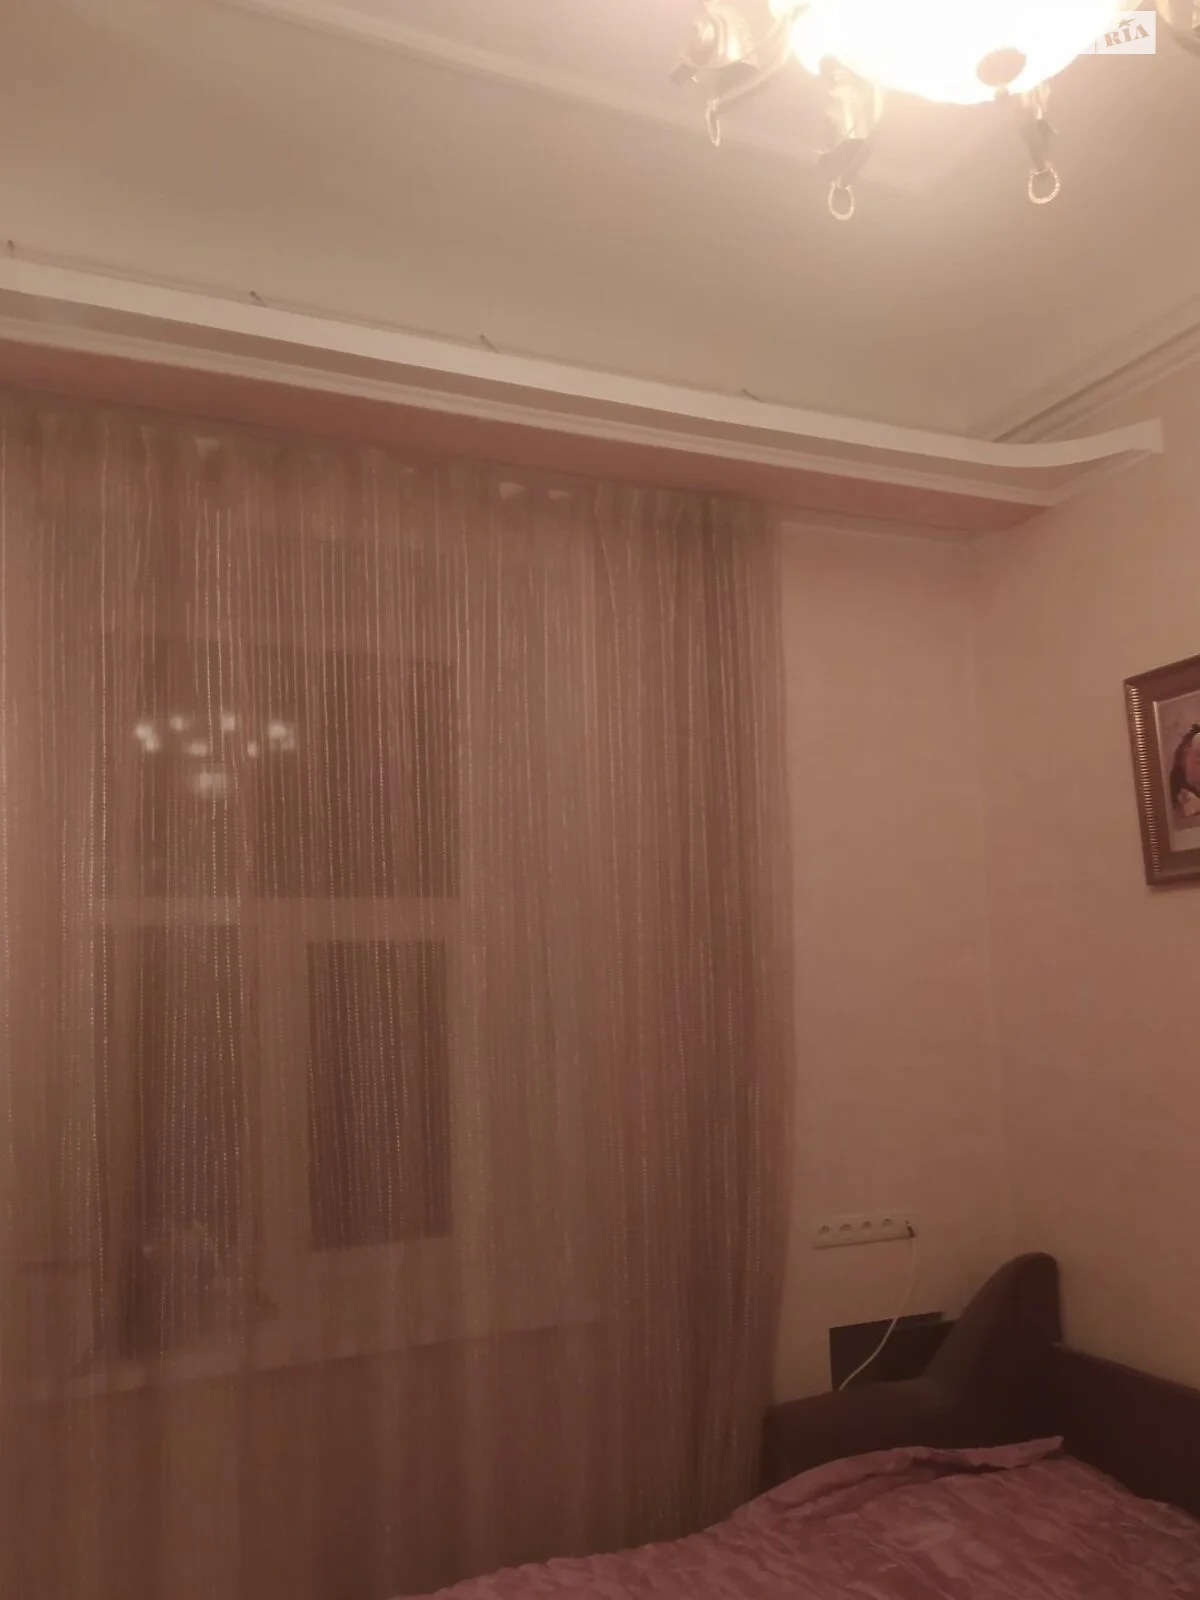 Продается комната 110 кв. м в Одессе, цена: 55000 $ - фото 1